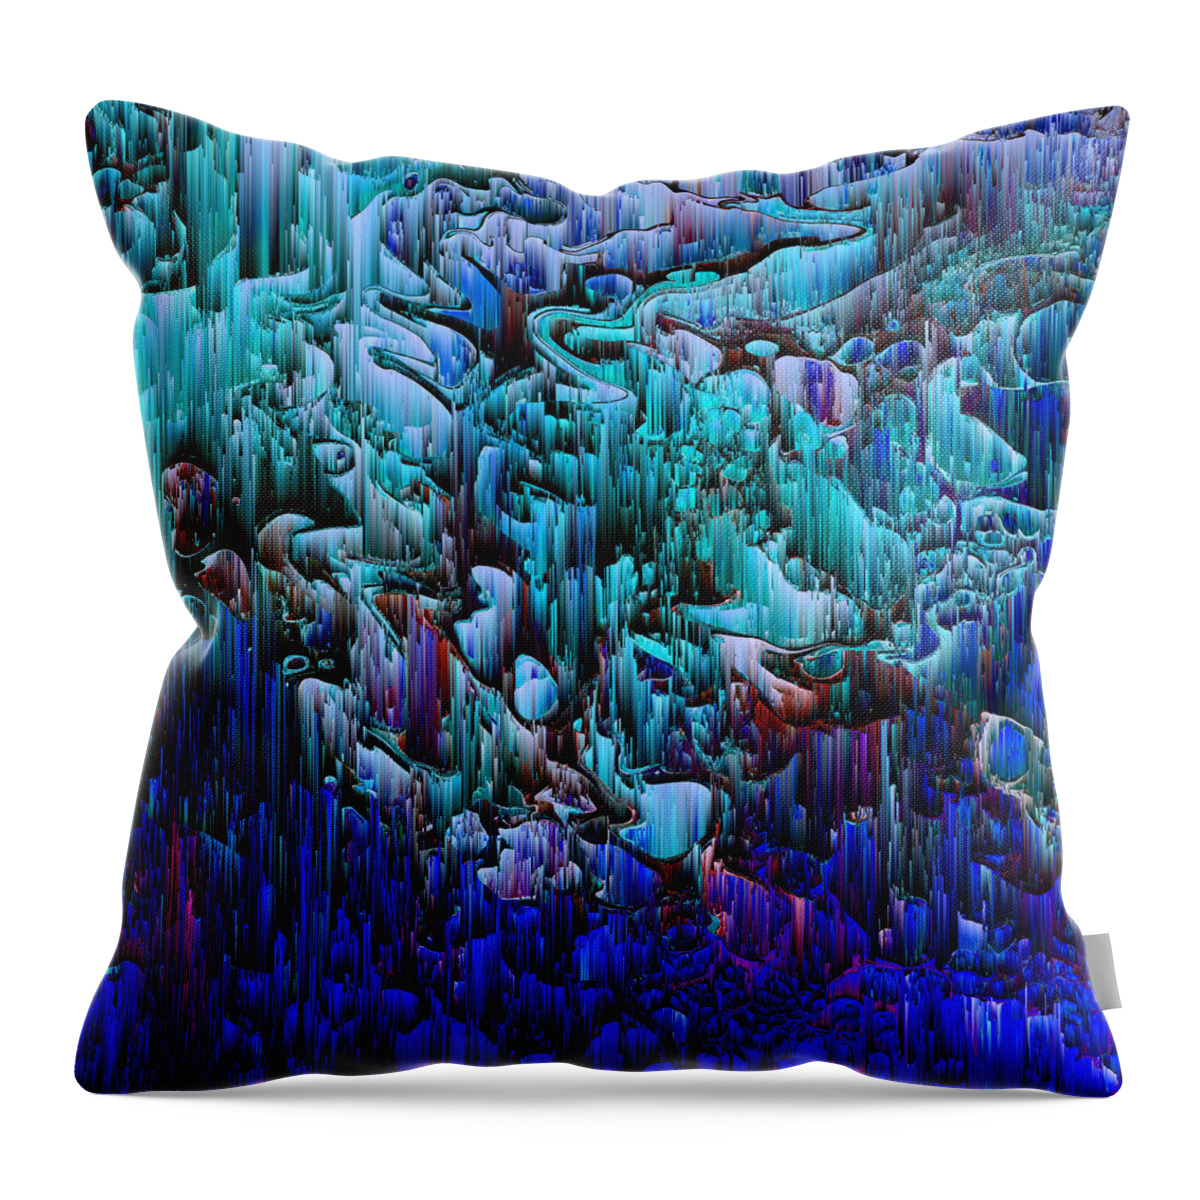 Glitch Throw Pillow featuring the digital art I'm No Glitch - Abstract Pixel Art by Jennifer Walsh